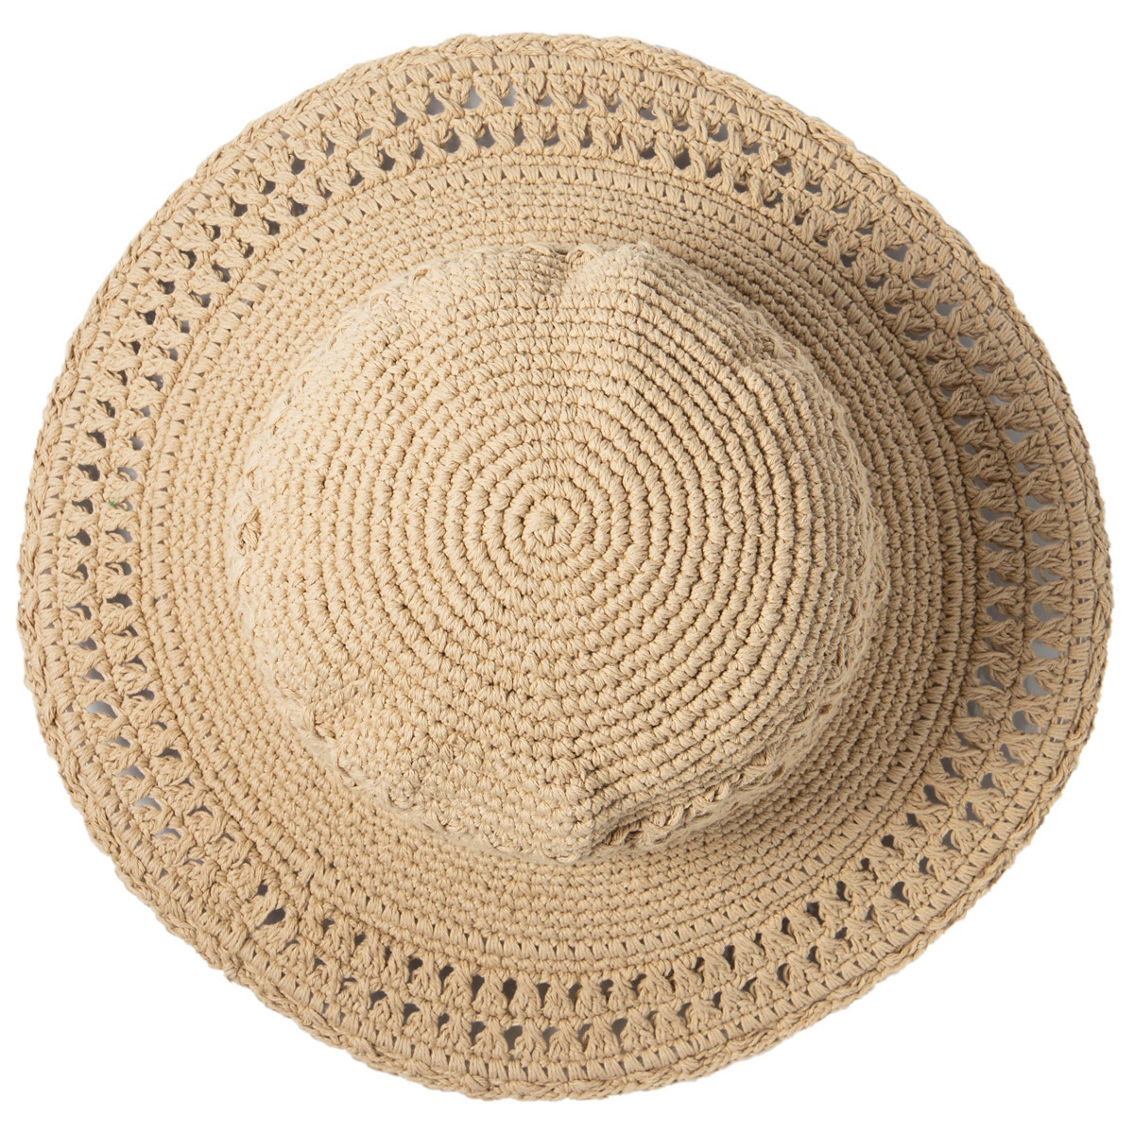 San Diego Hat Company Womens Crochet Hat - Image 2 of 4